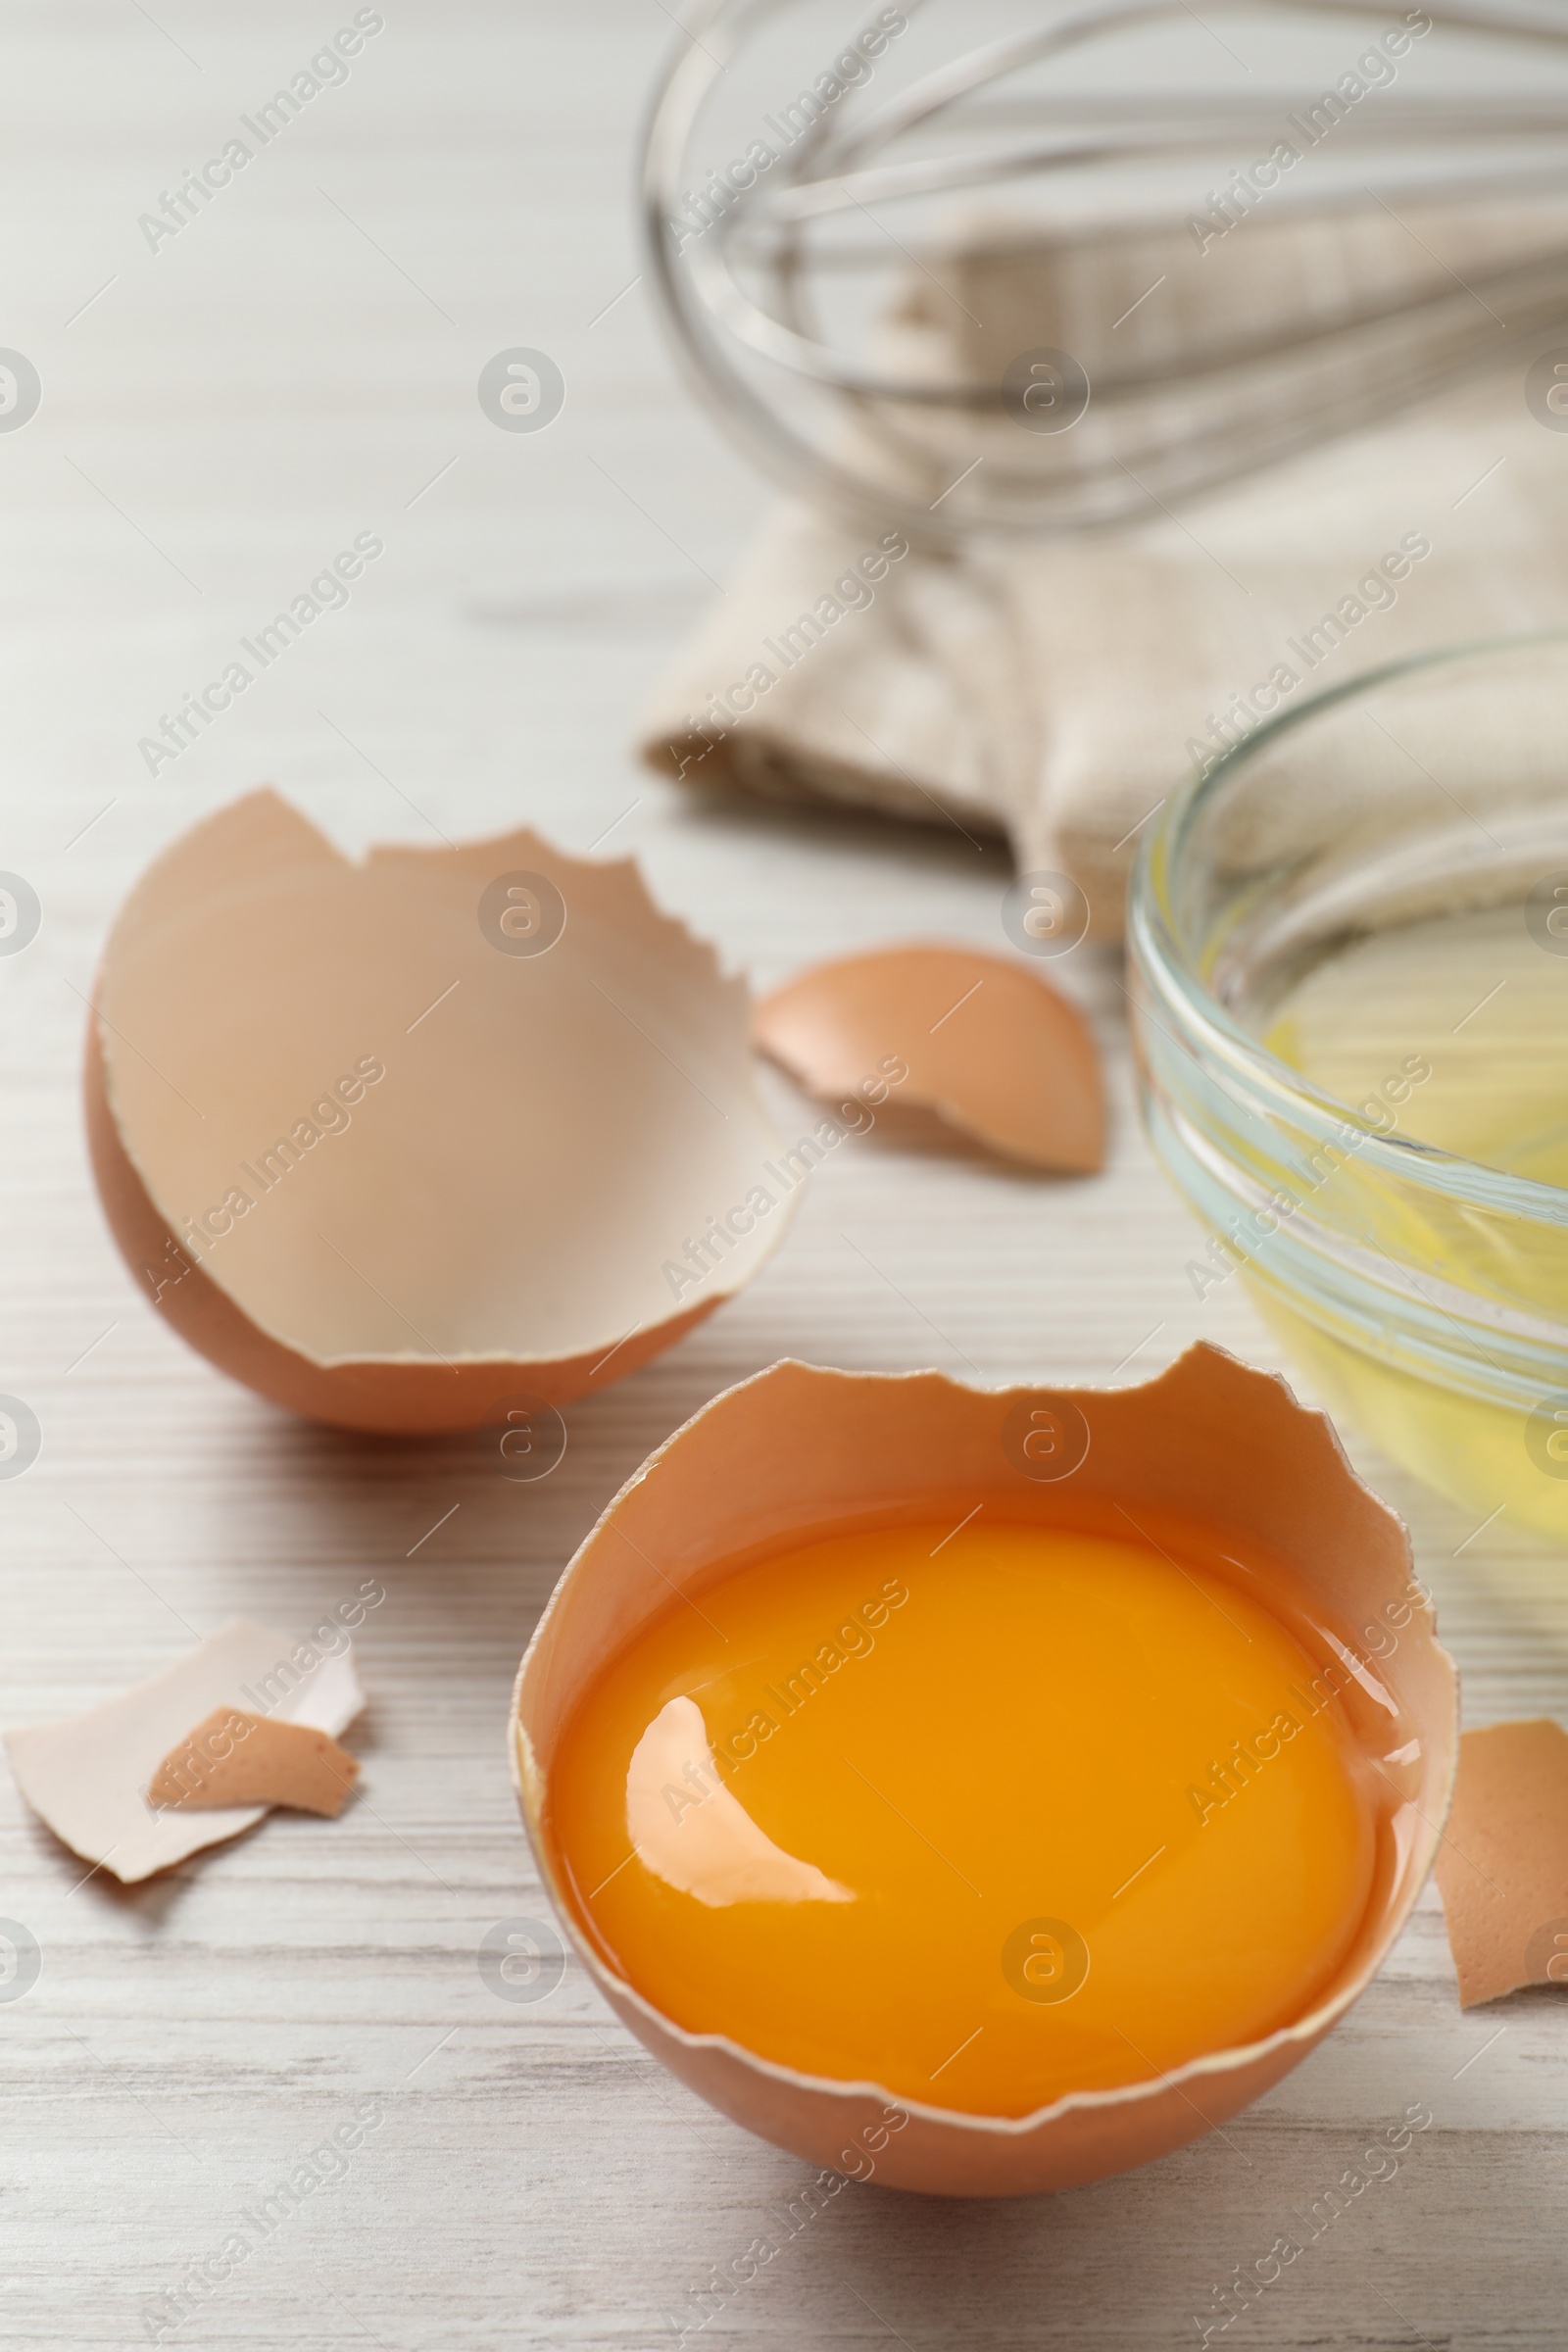 Photo of Raw yolk in broken chicken eggshell on wooden table, closeup